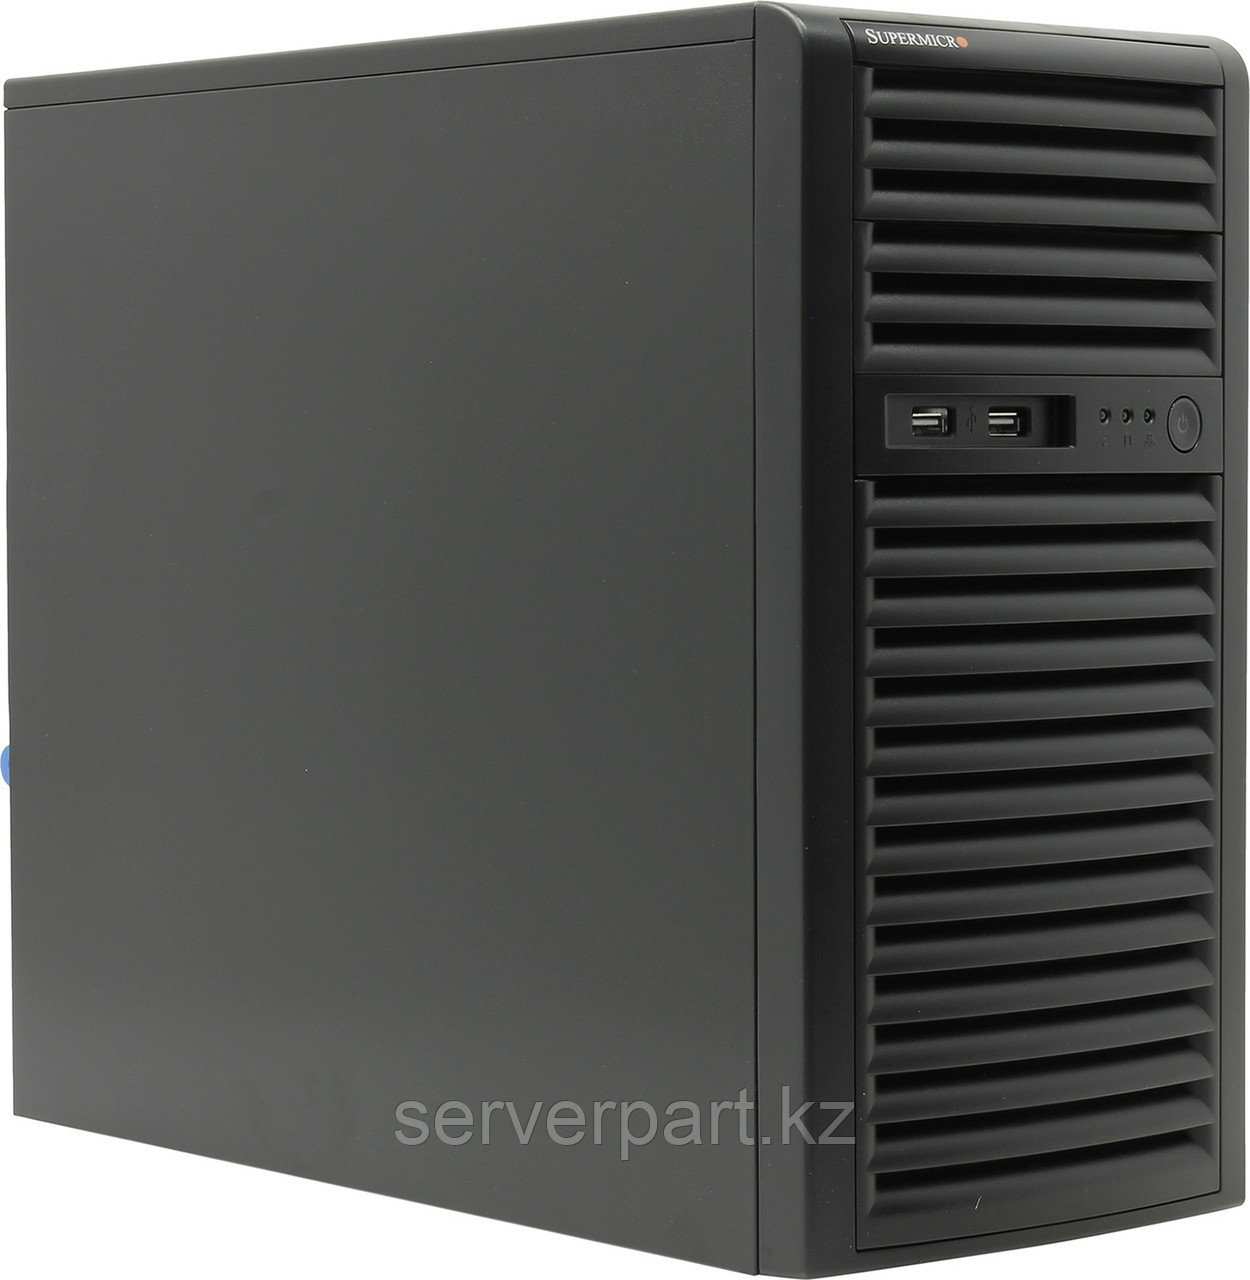 Сервер Supermicro SYS-5039C (Tower 4LFF)/4-core intel xeon E2224 (3.4GHz)/32GB UDIMM nECC